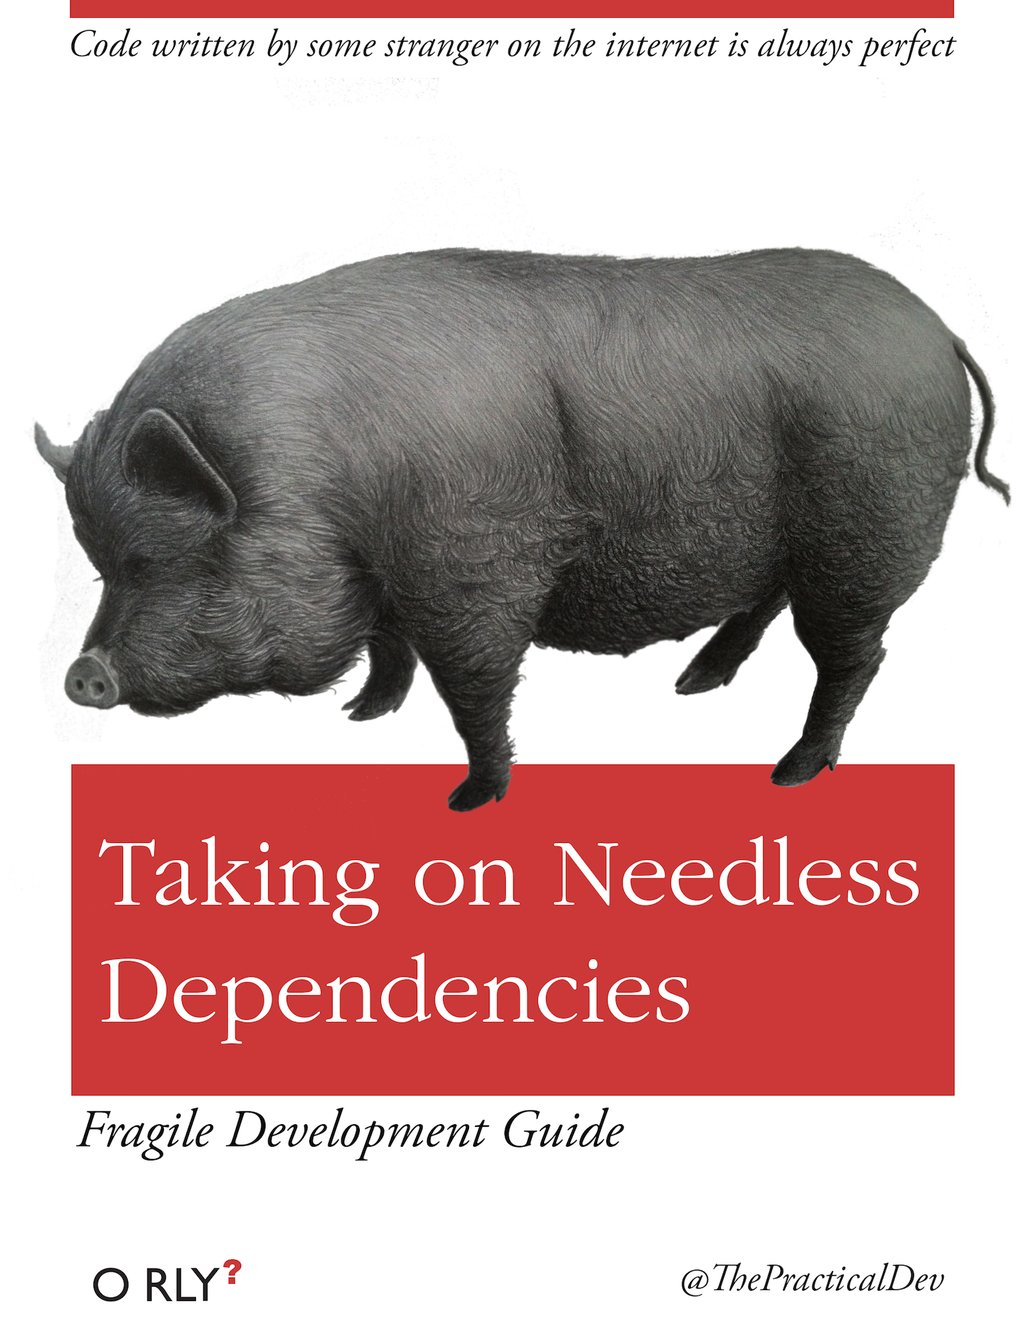 Taking on Needless Dependencies